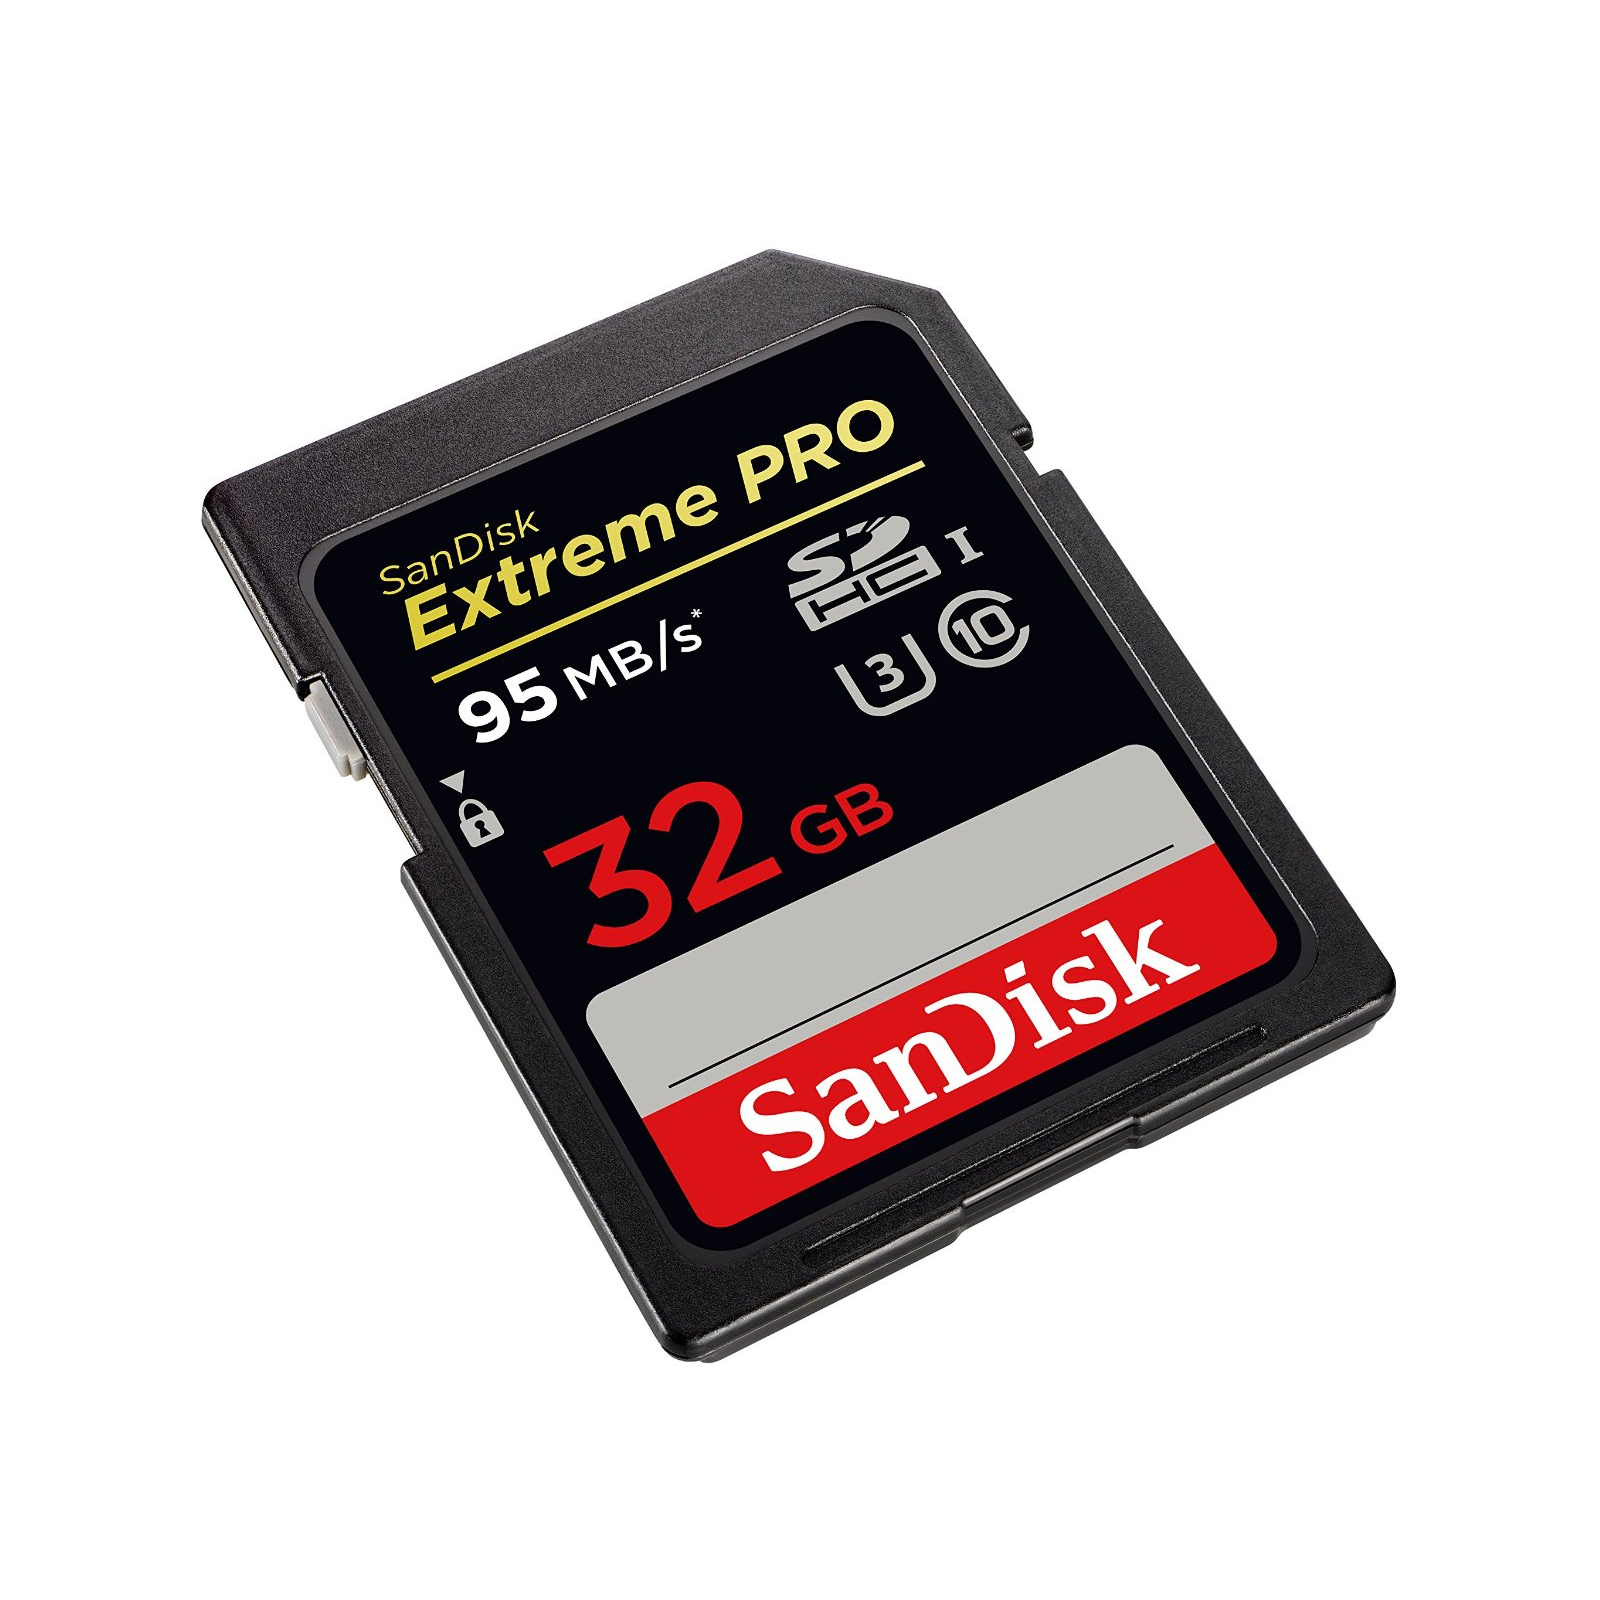 Карта памяти SanDisk 32GB SDHC Class10 UHS-I V30 4K Extreme Pro (SDSDXXG-032G-GN4IN) изображение 2